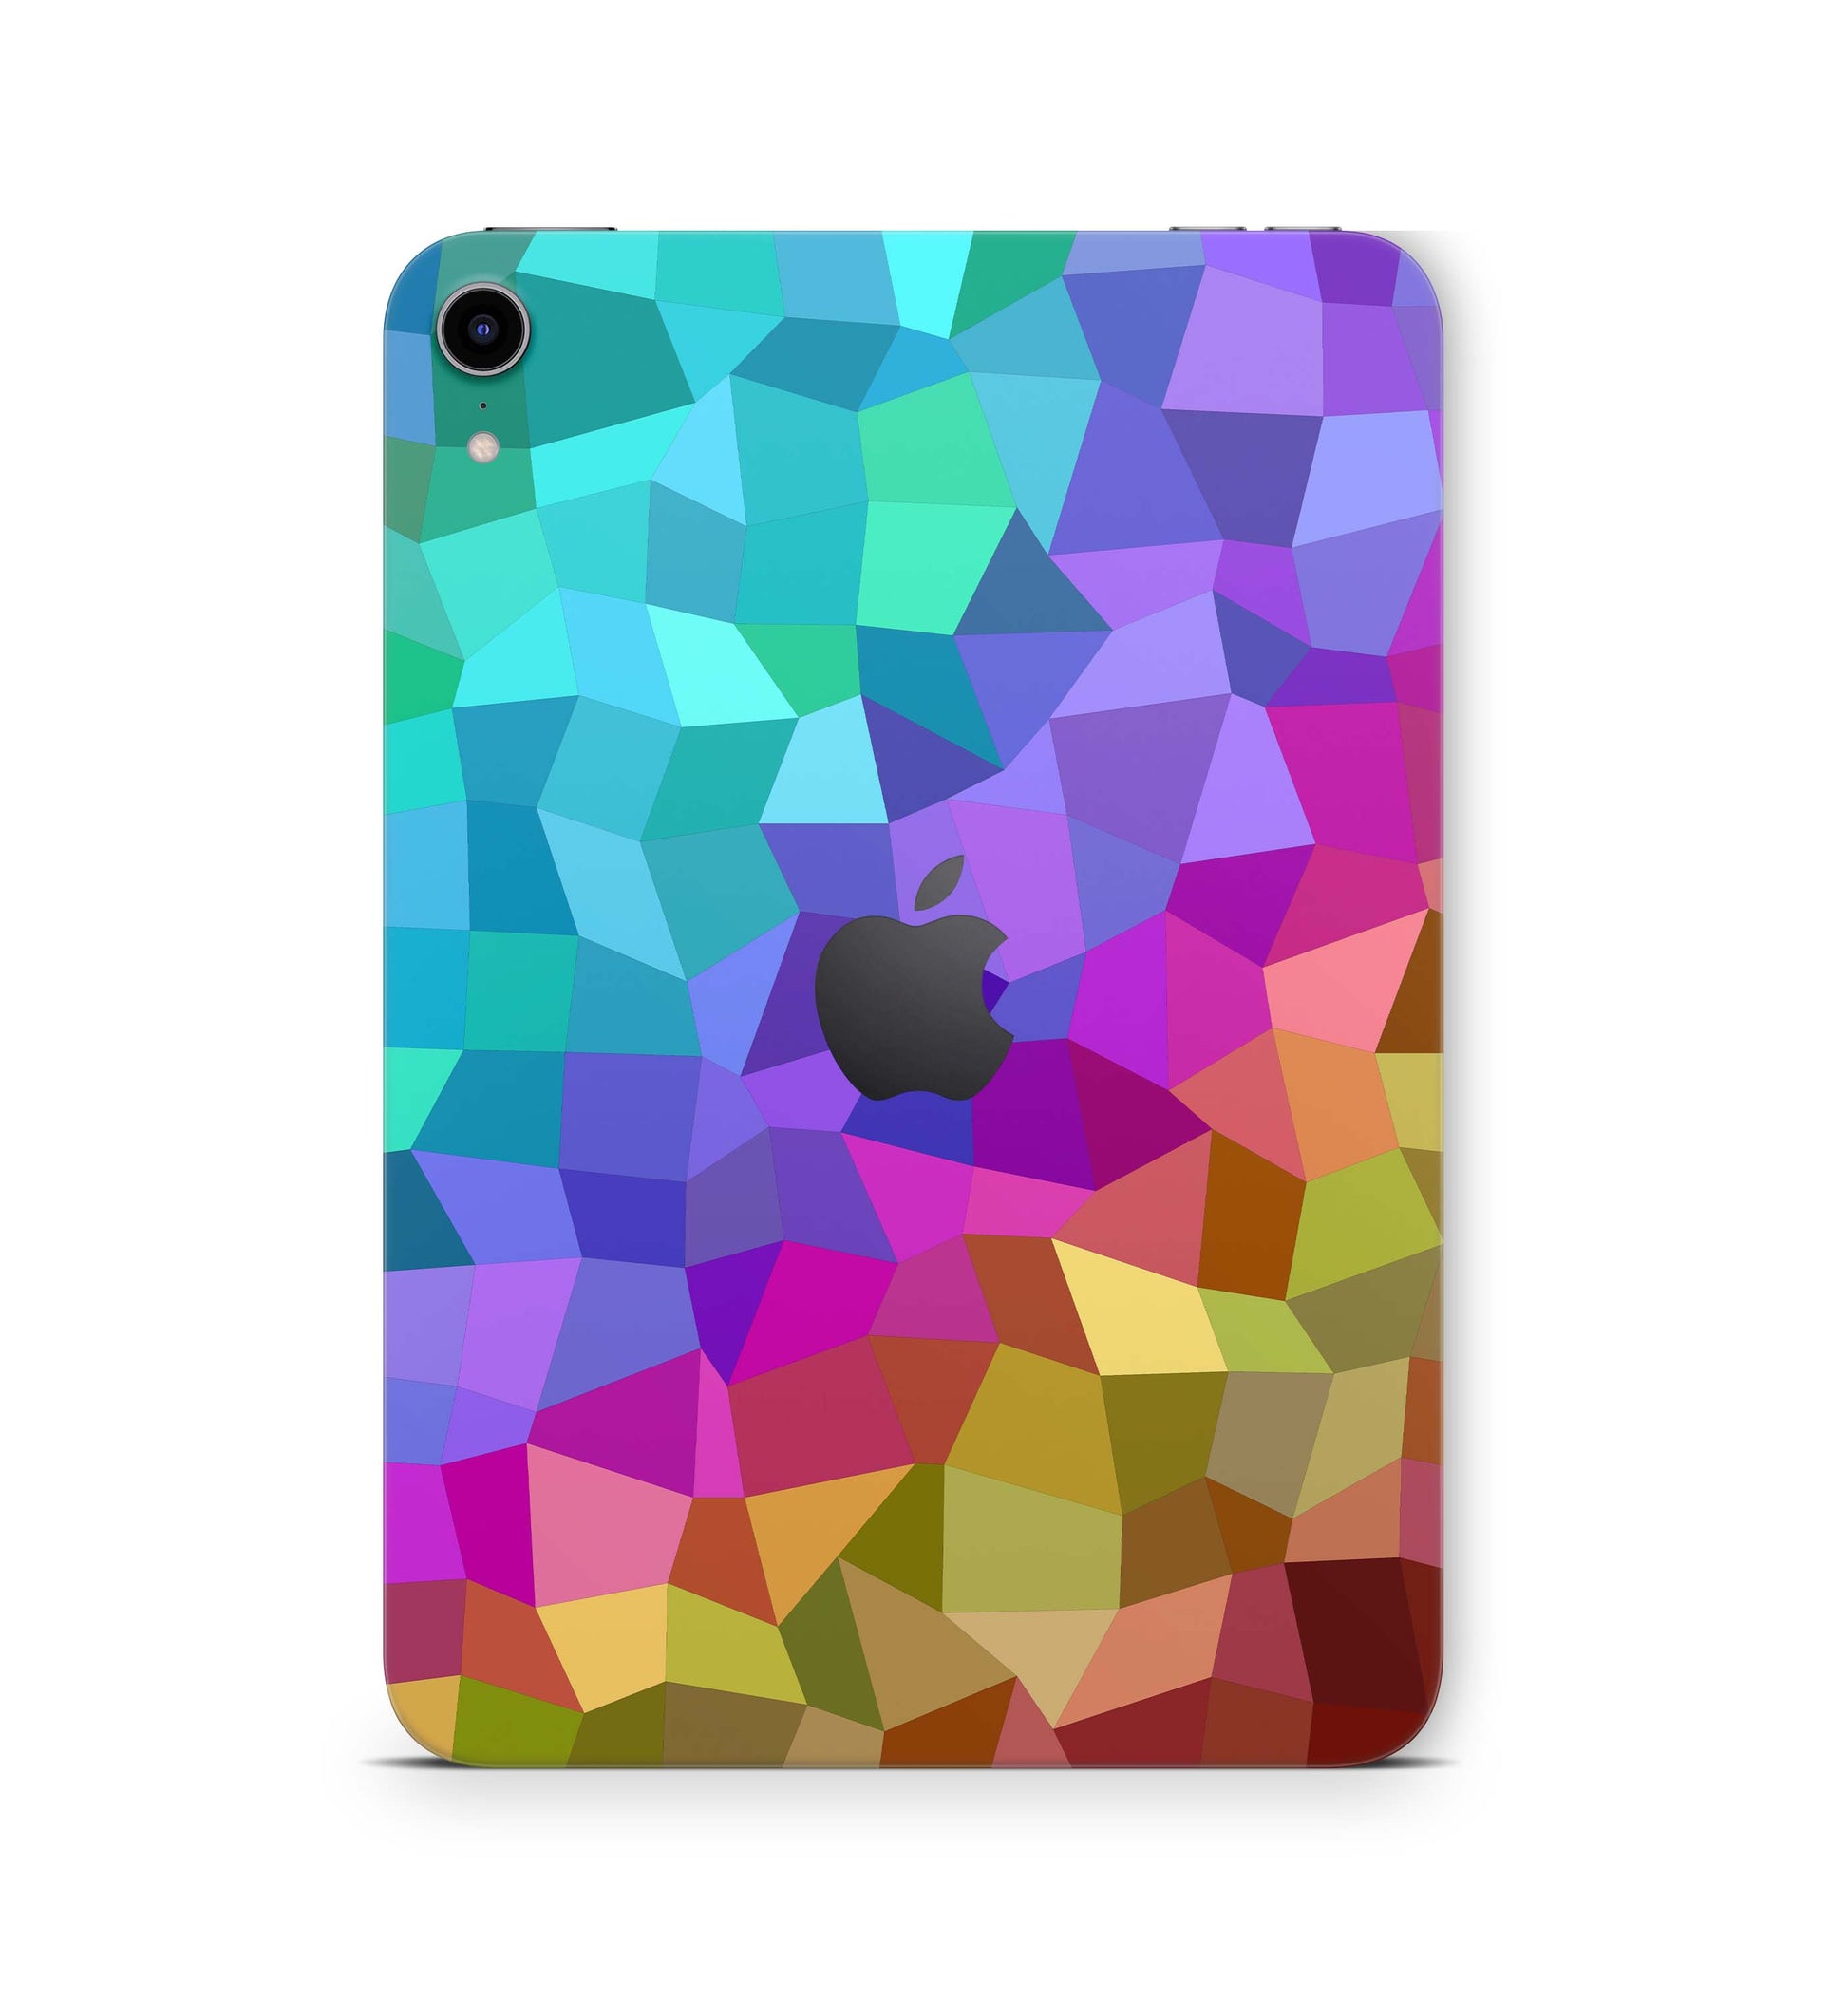 Apple iPad Skin Design Cover Folie Vinyl Skins & Wraps für alle iPad Modelle Aufkleber Skins4u Cruo  